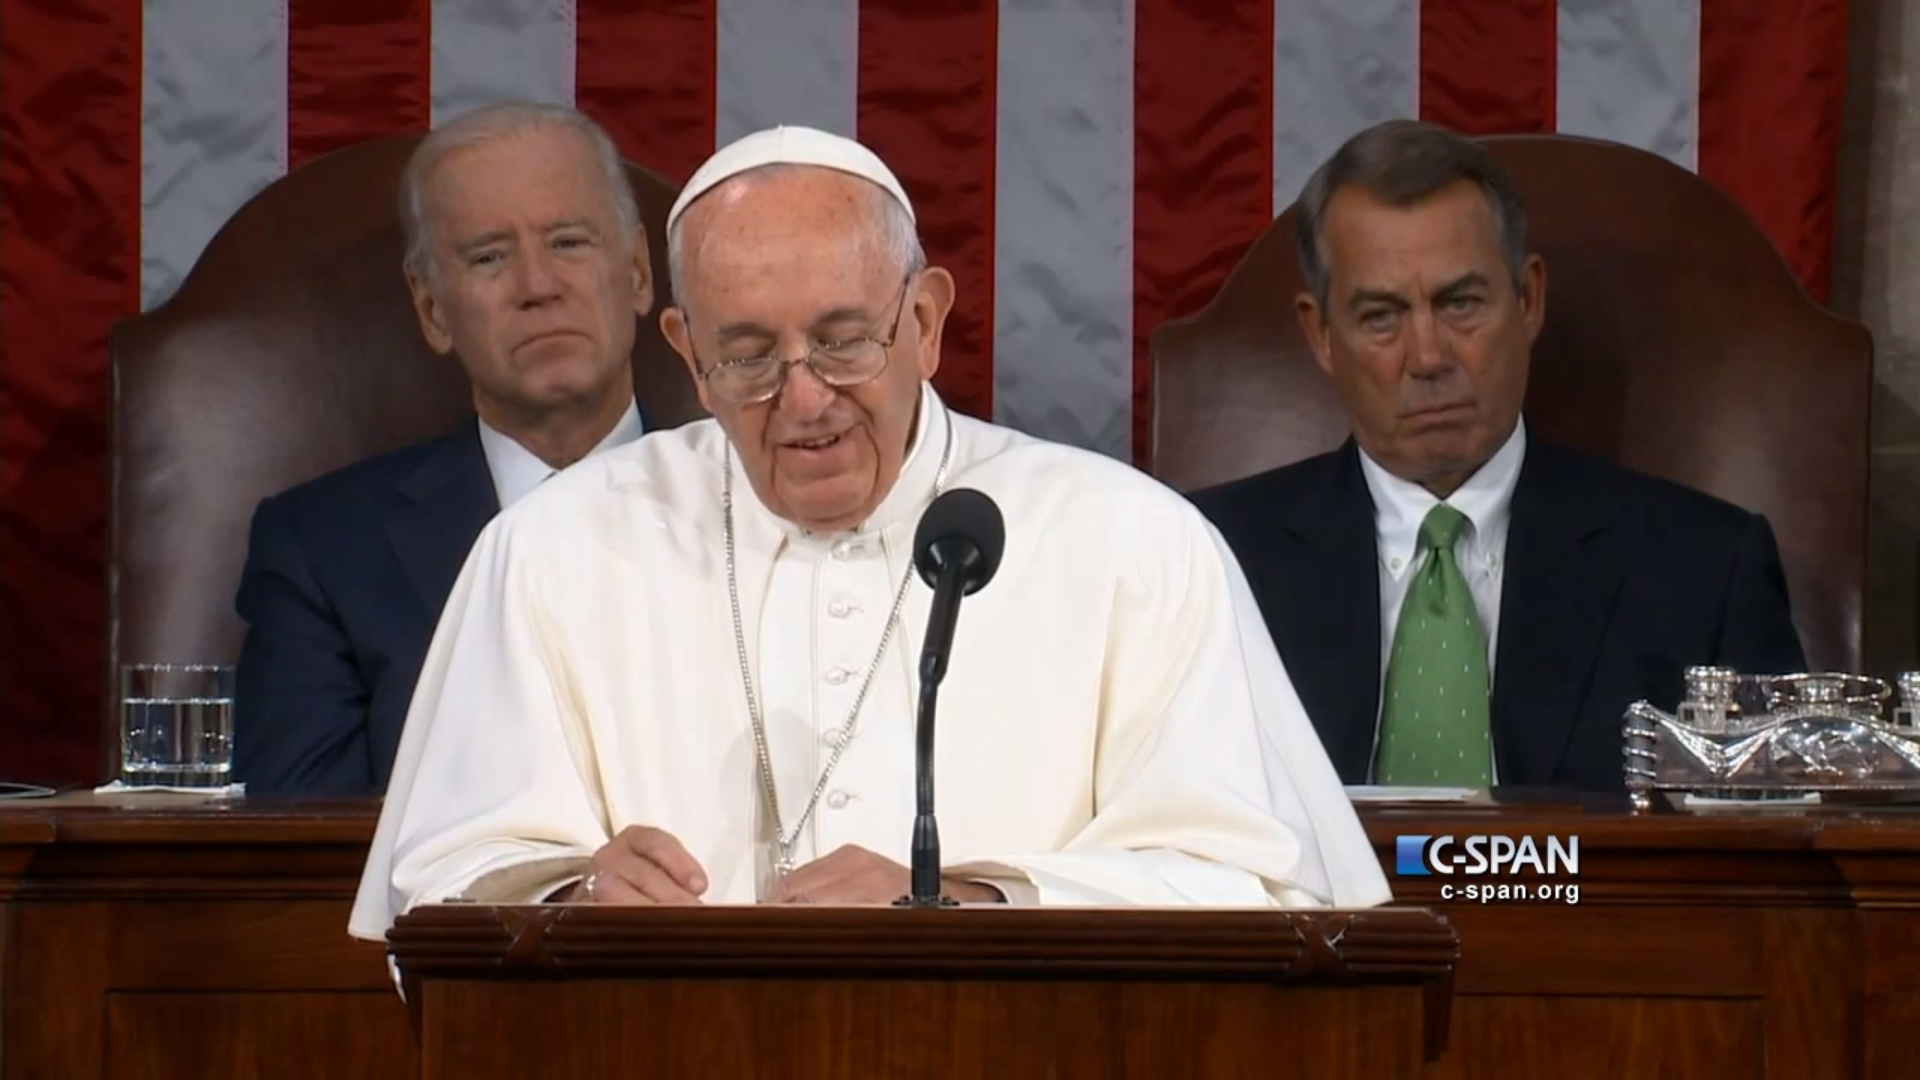 Pope Francis addresses Congress